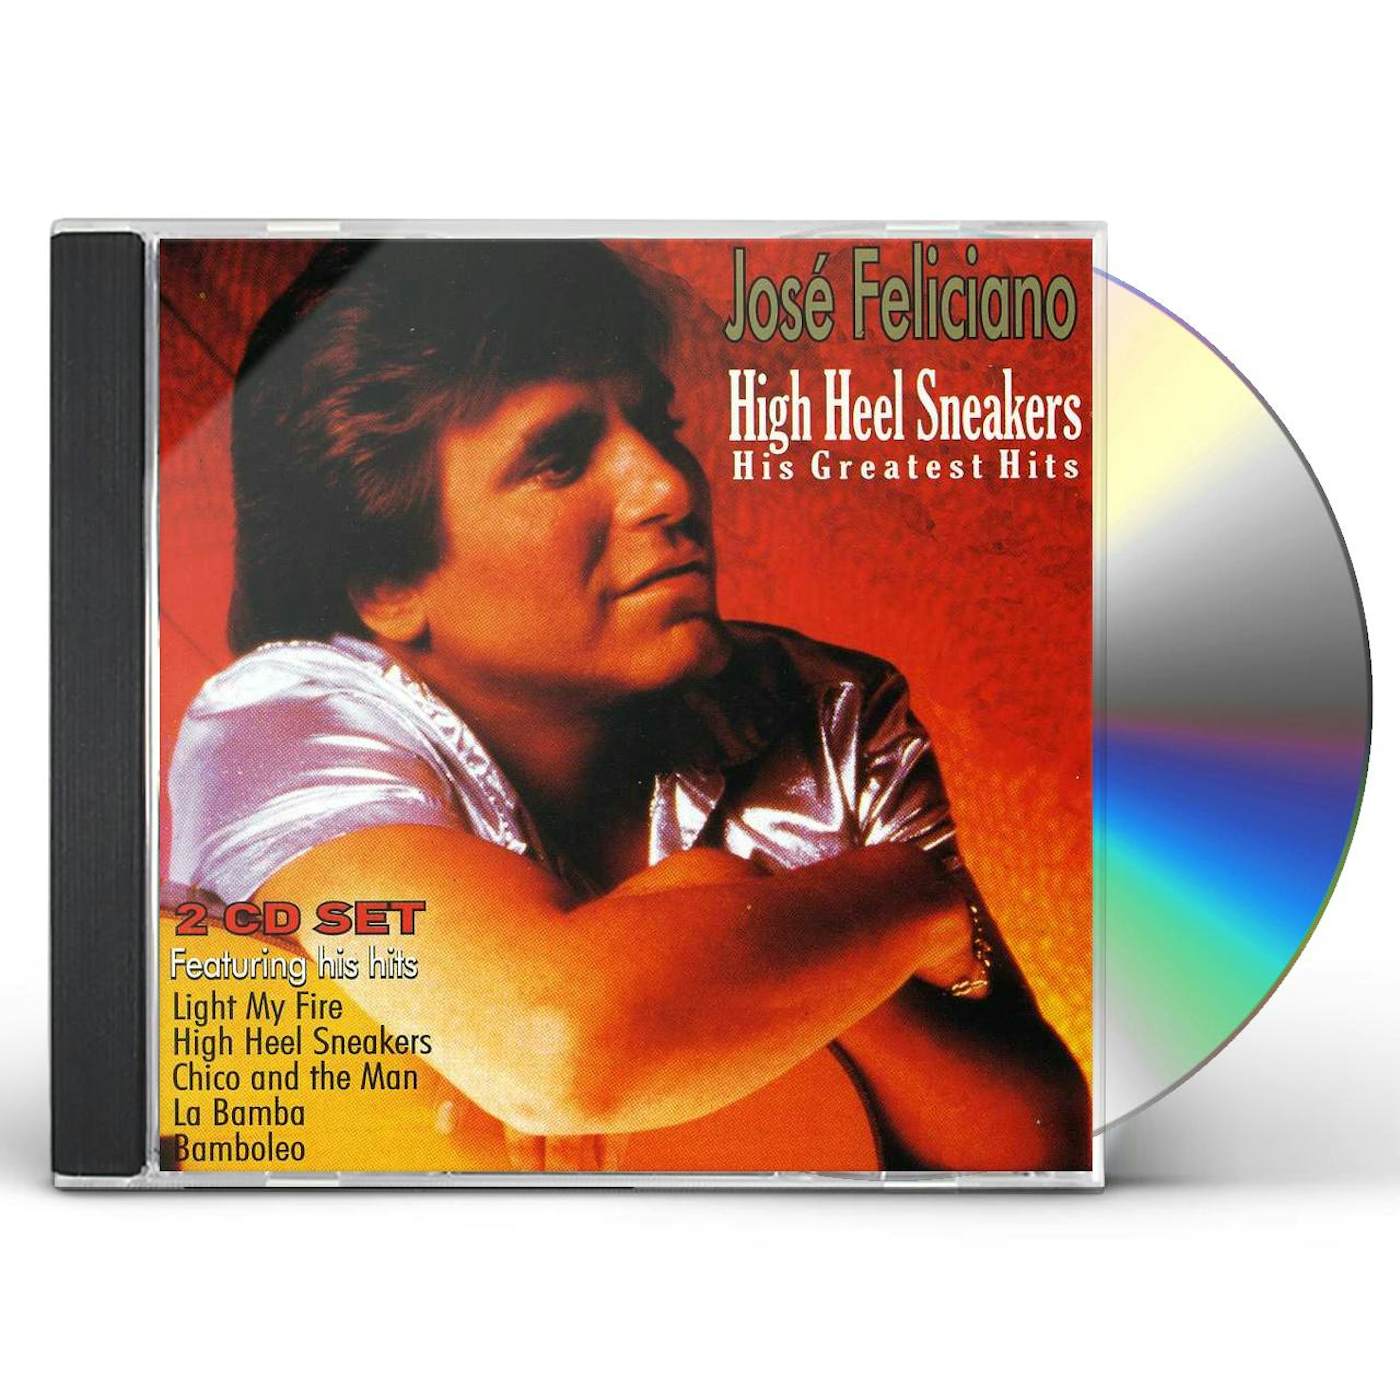 José Feliciano HIGH HEEL SNEAKERS: HIS GREATEST HITS CD